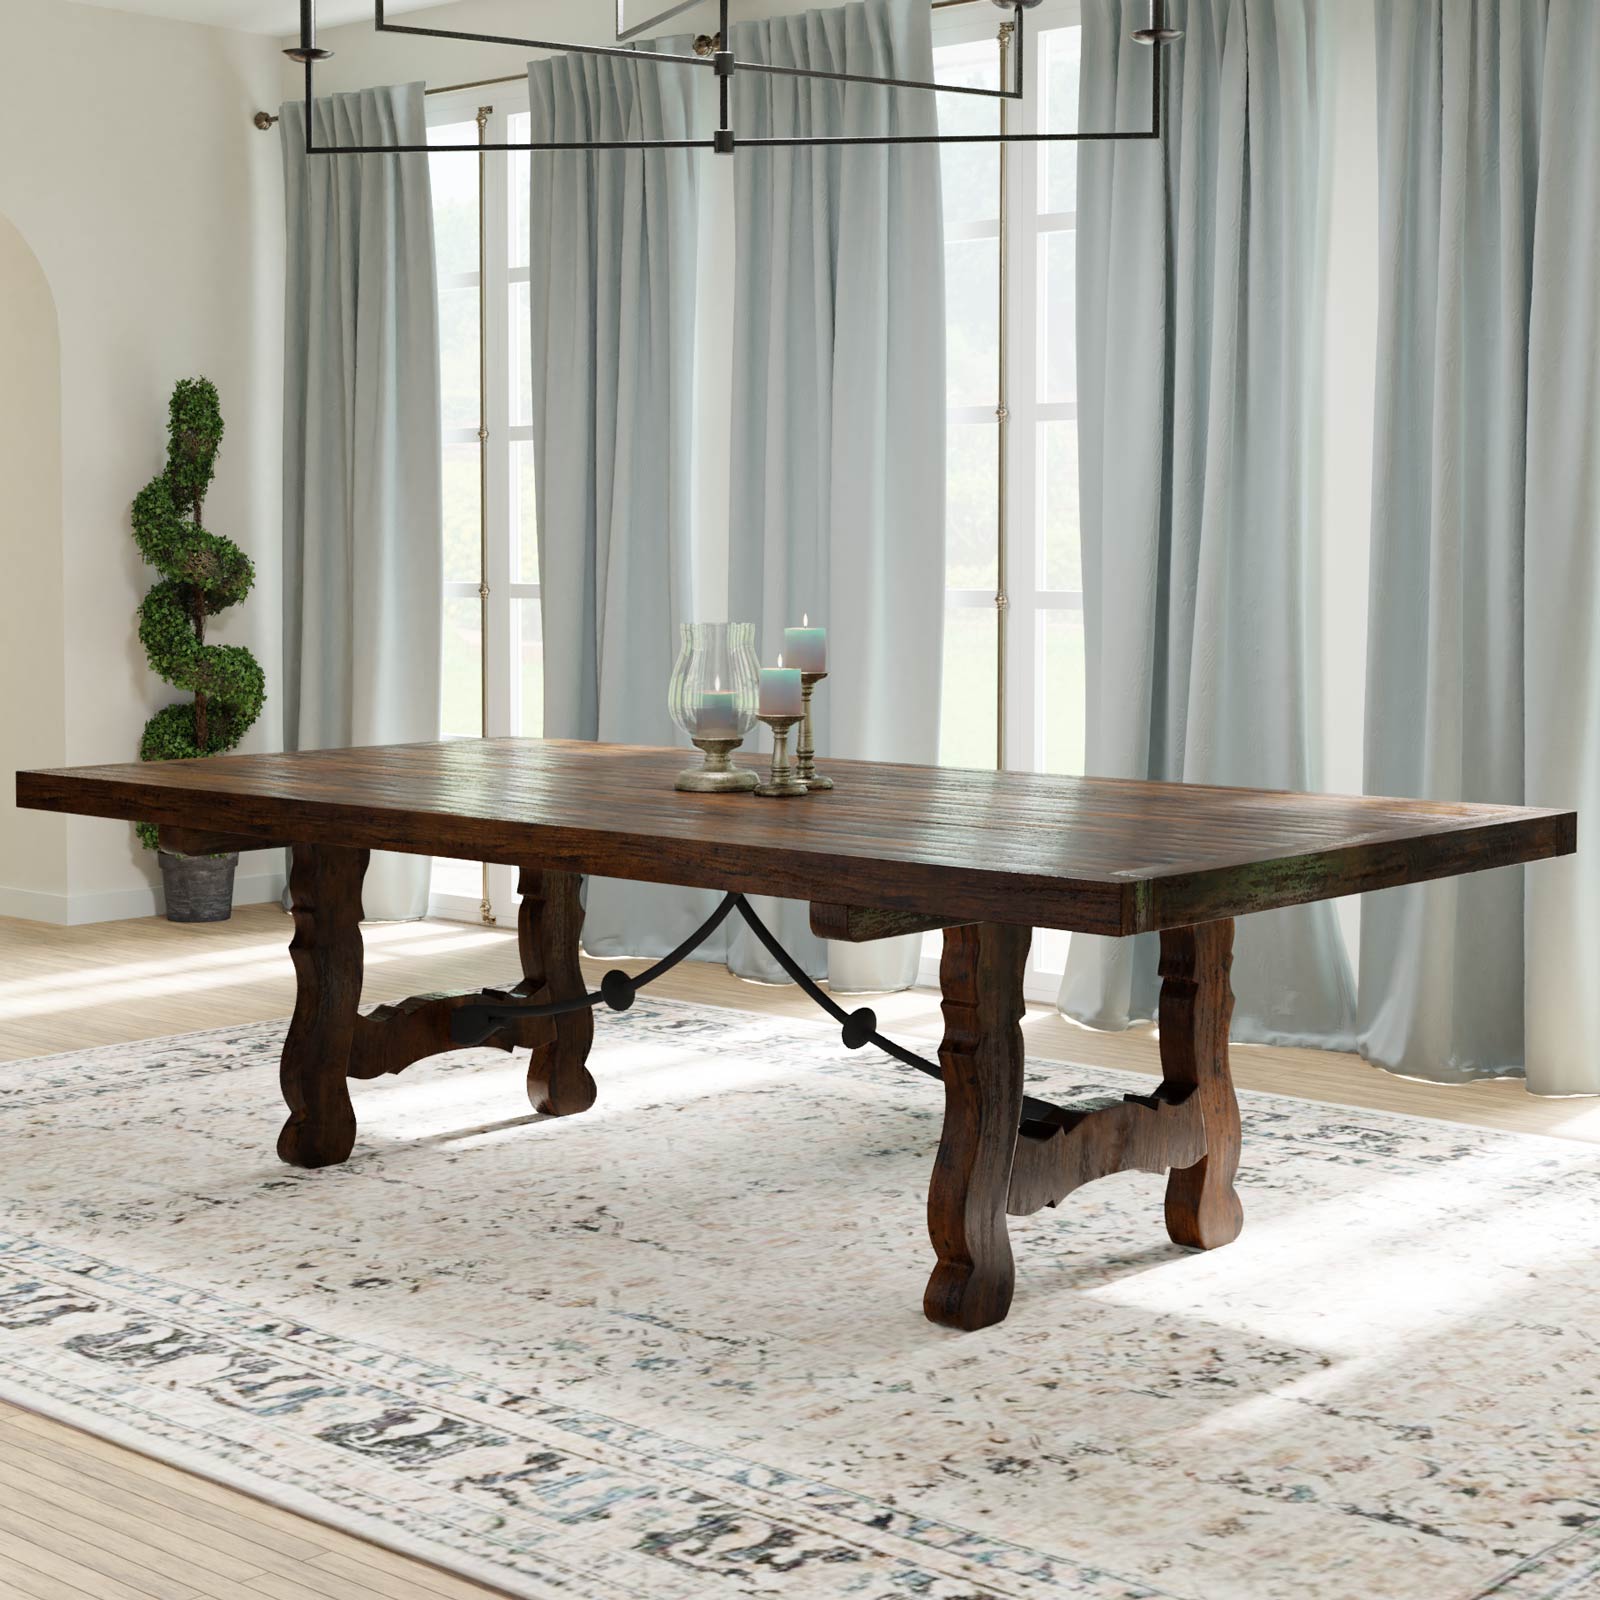 Furniture Source International Pastora Dining Table with Iron Work